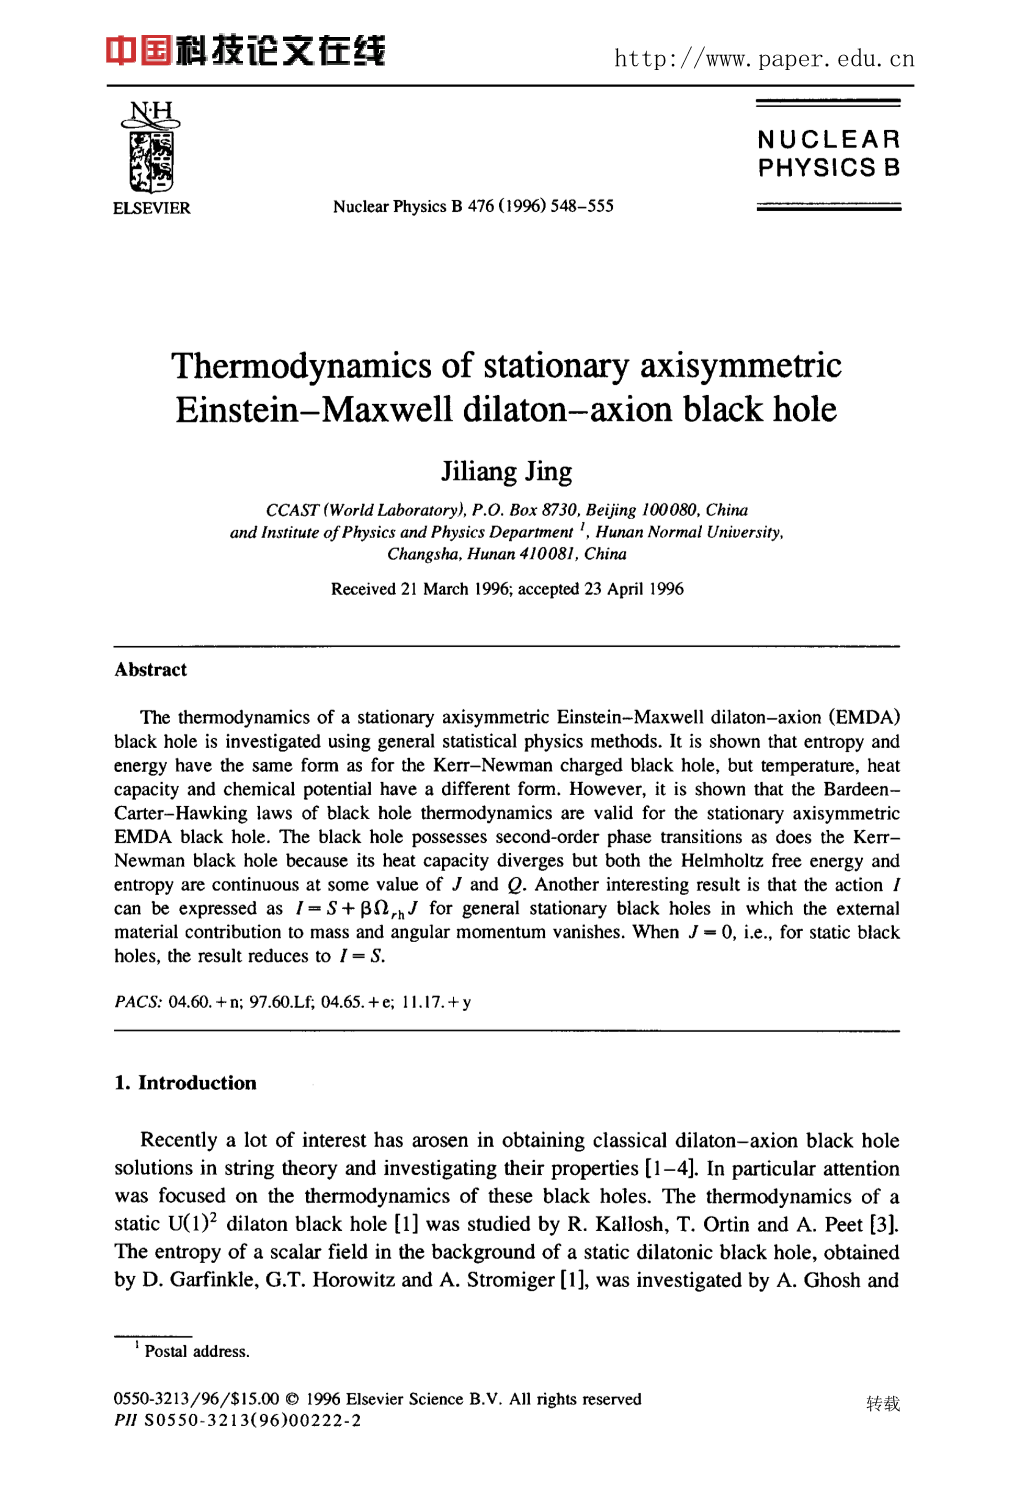 Thermodynamics of Stationary Axisymmetric Einstein-Maxwell Dilaton-Axion Black Hole Jiliang Jing CCAST (Worm Laboratory), P.O